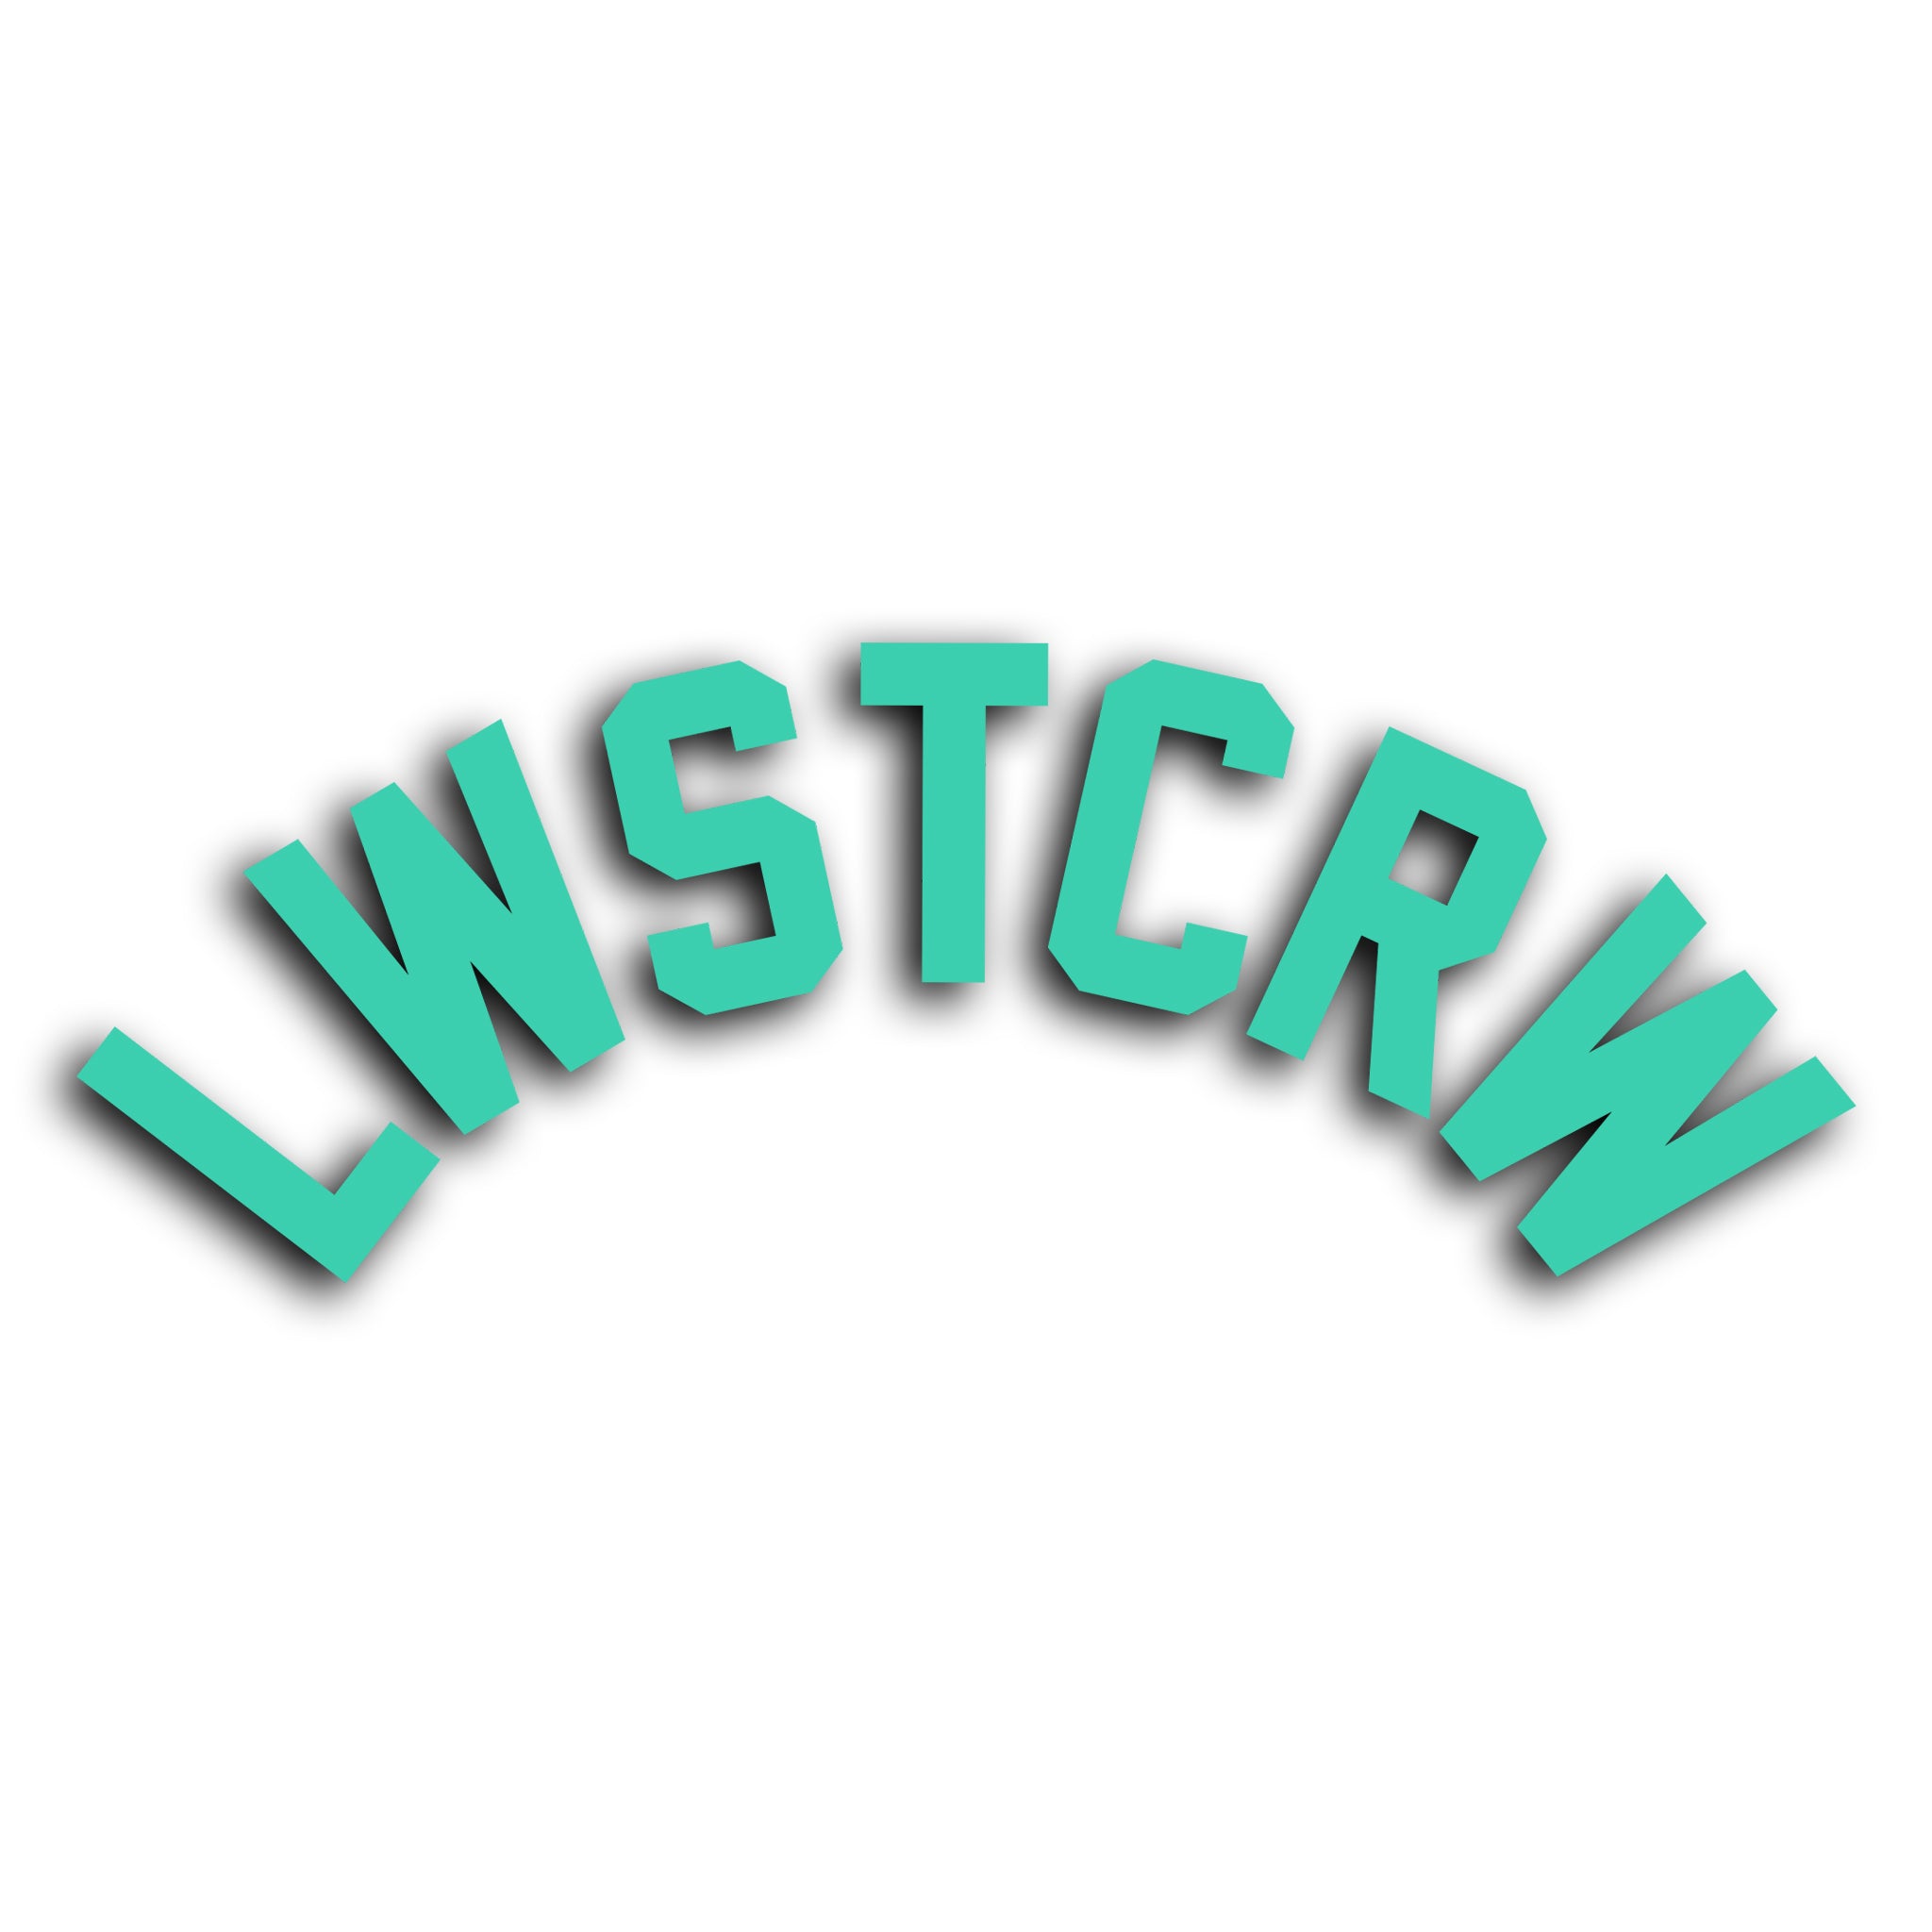 LWSTCRW™ Sticker "CURVED"